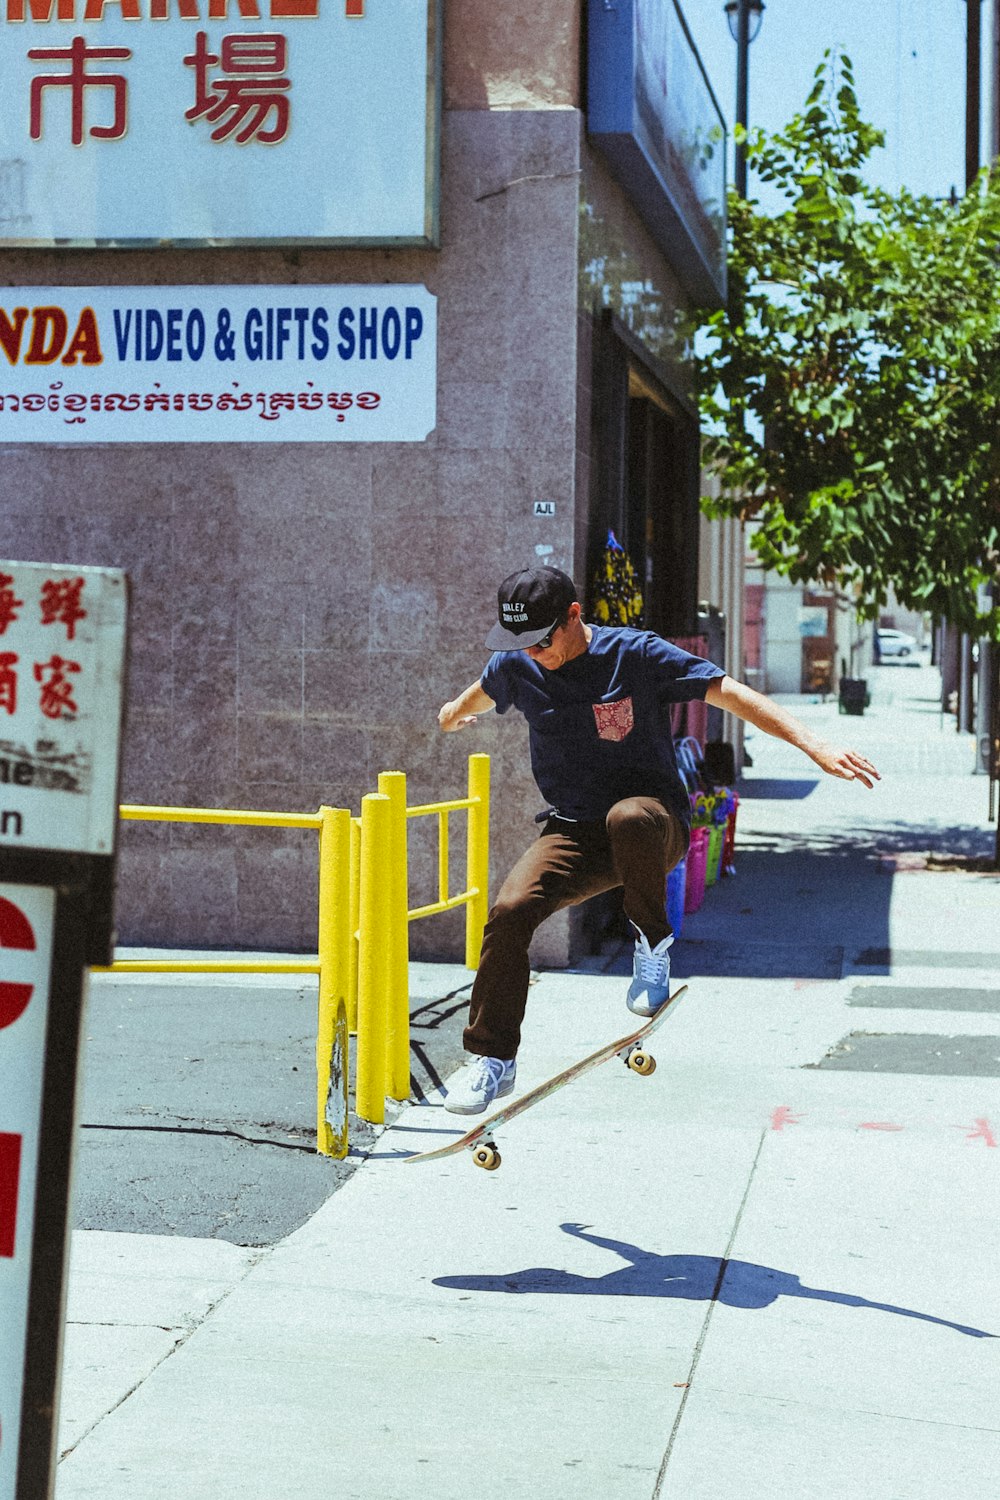 man in blue shirt skateboarding on gray surface